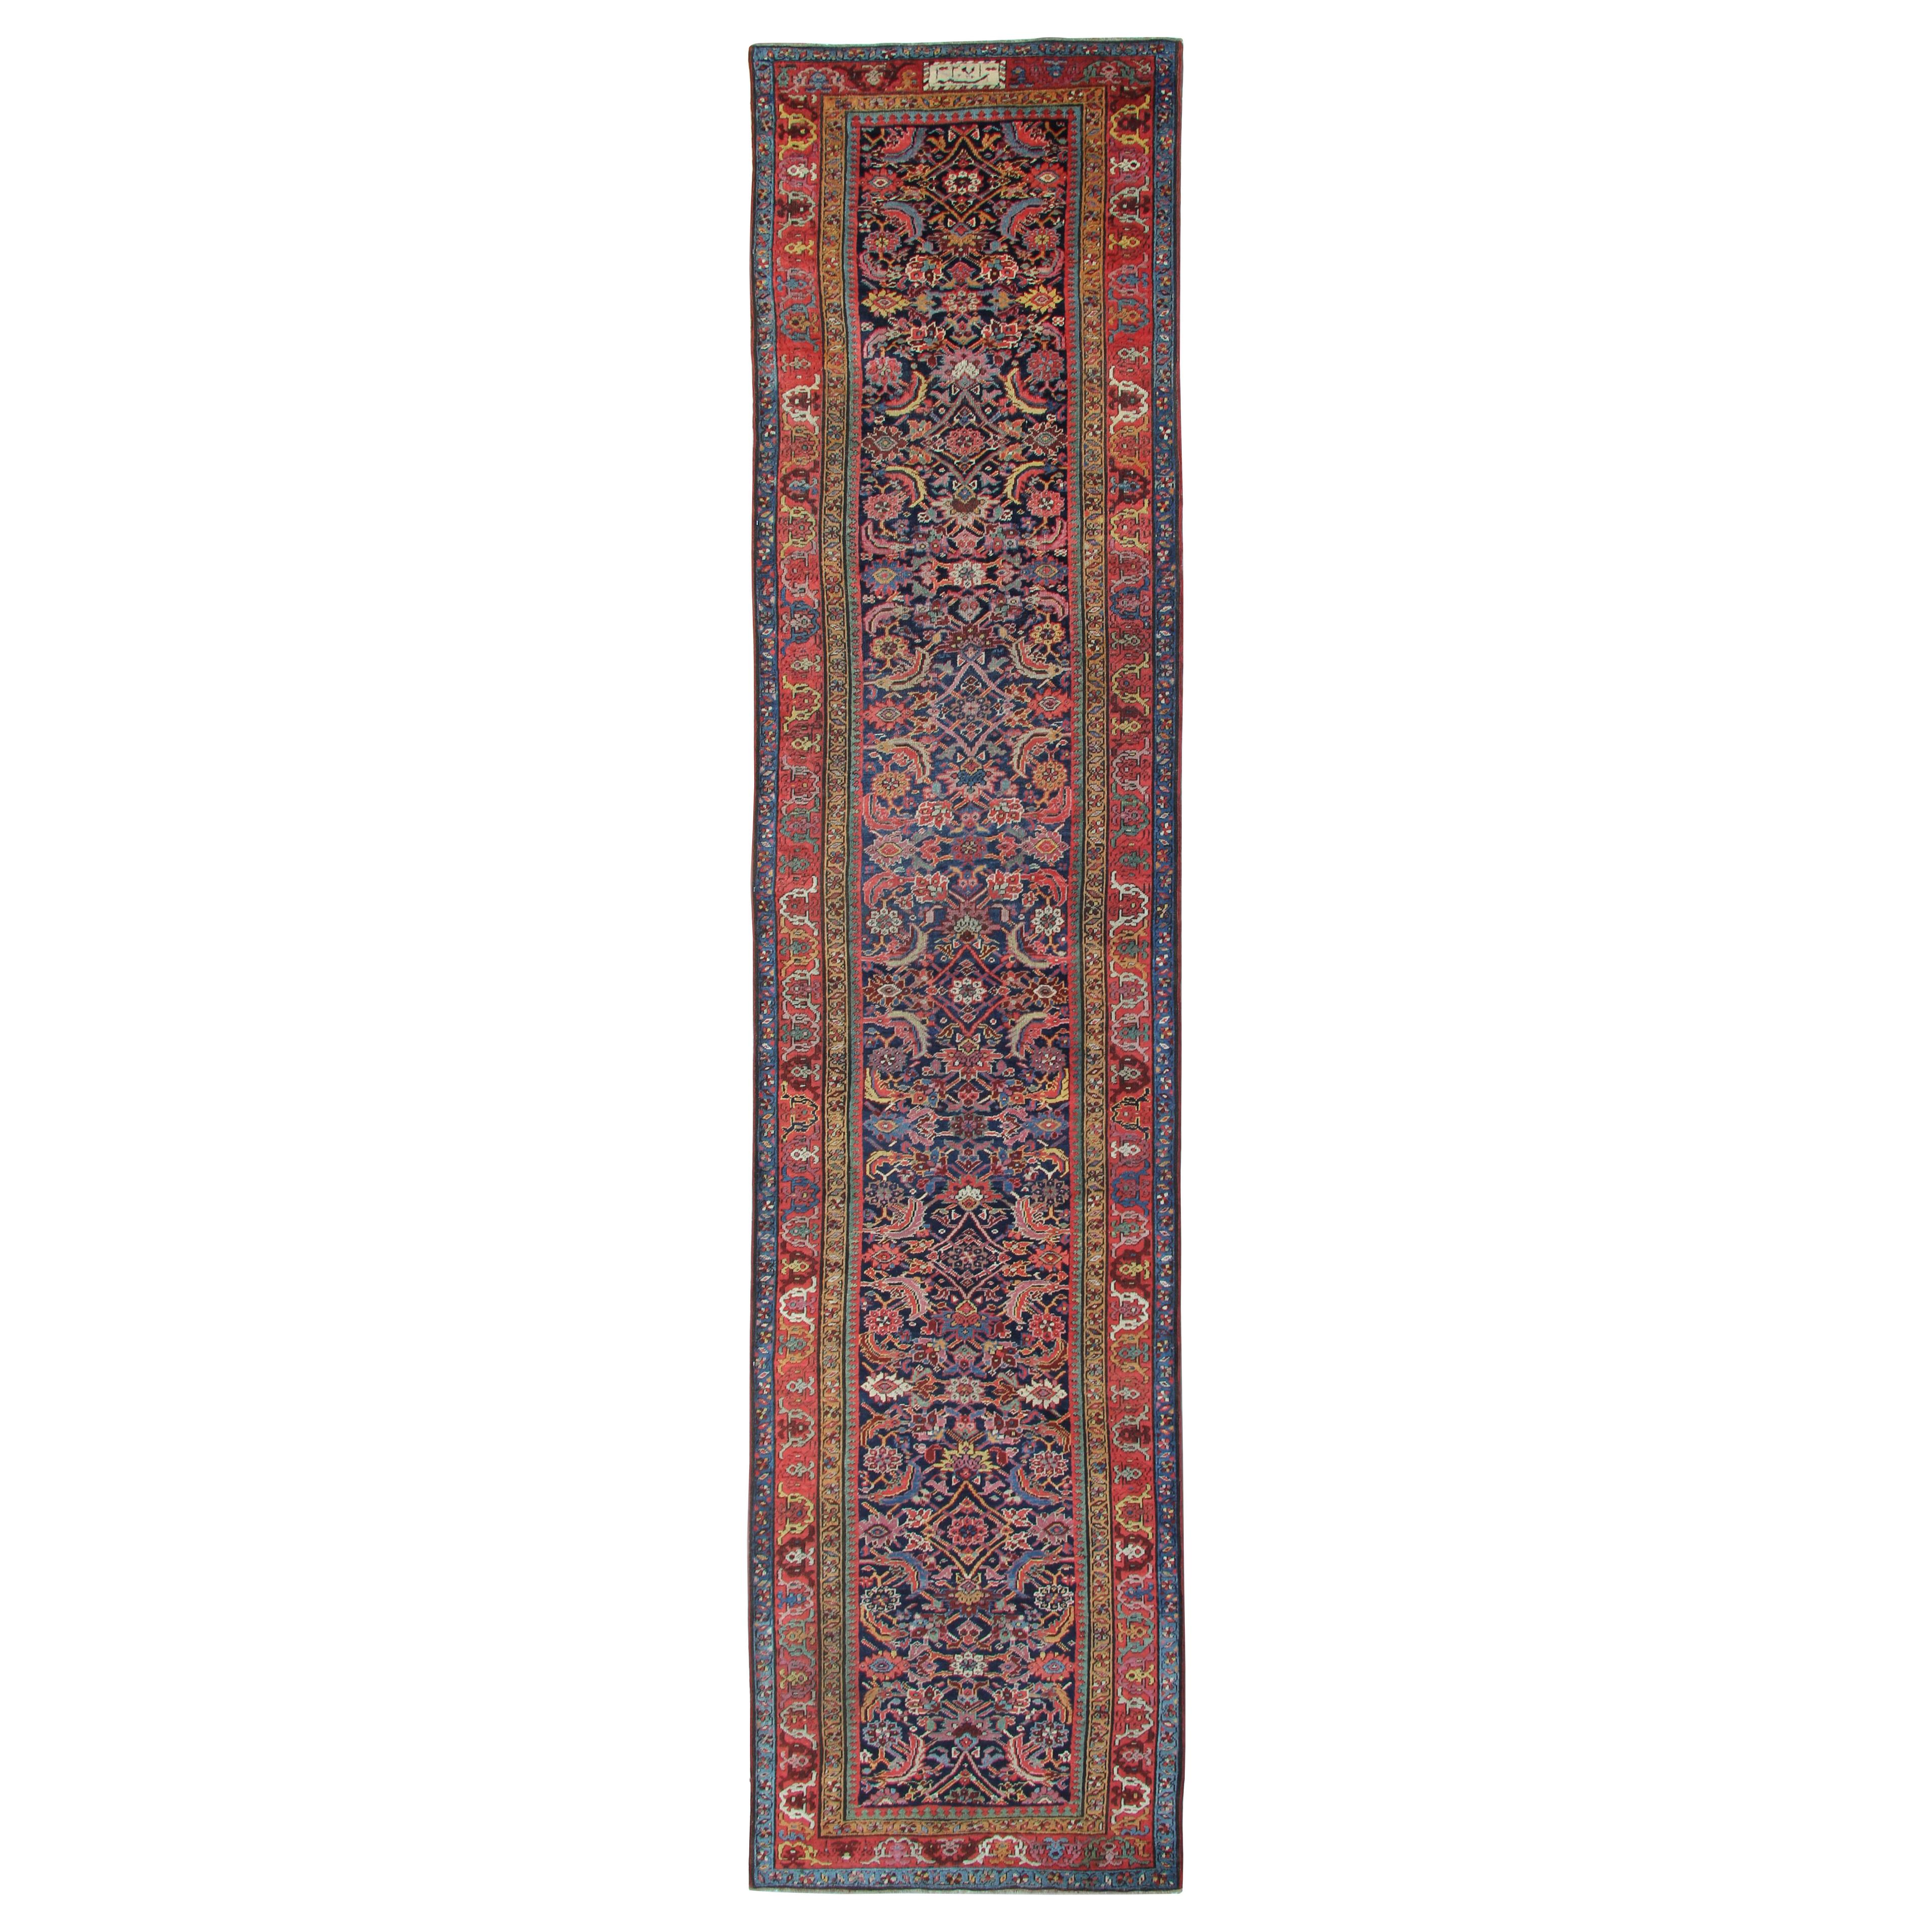 Antique Caucasian Runner Traditional Long Wool Karabakh Carpet Rug- 105x465cm